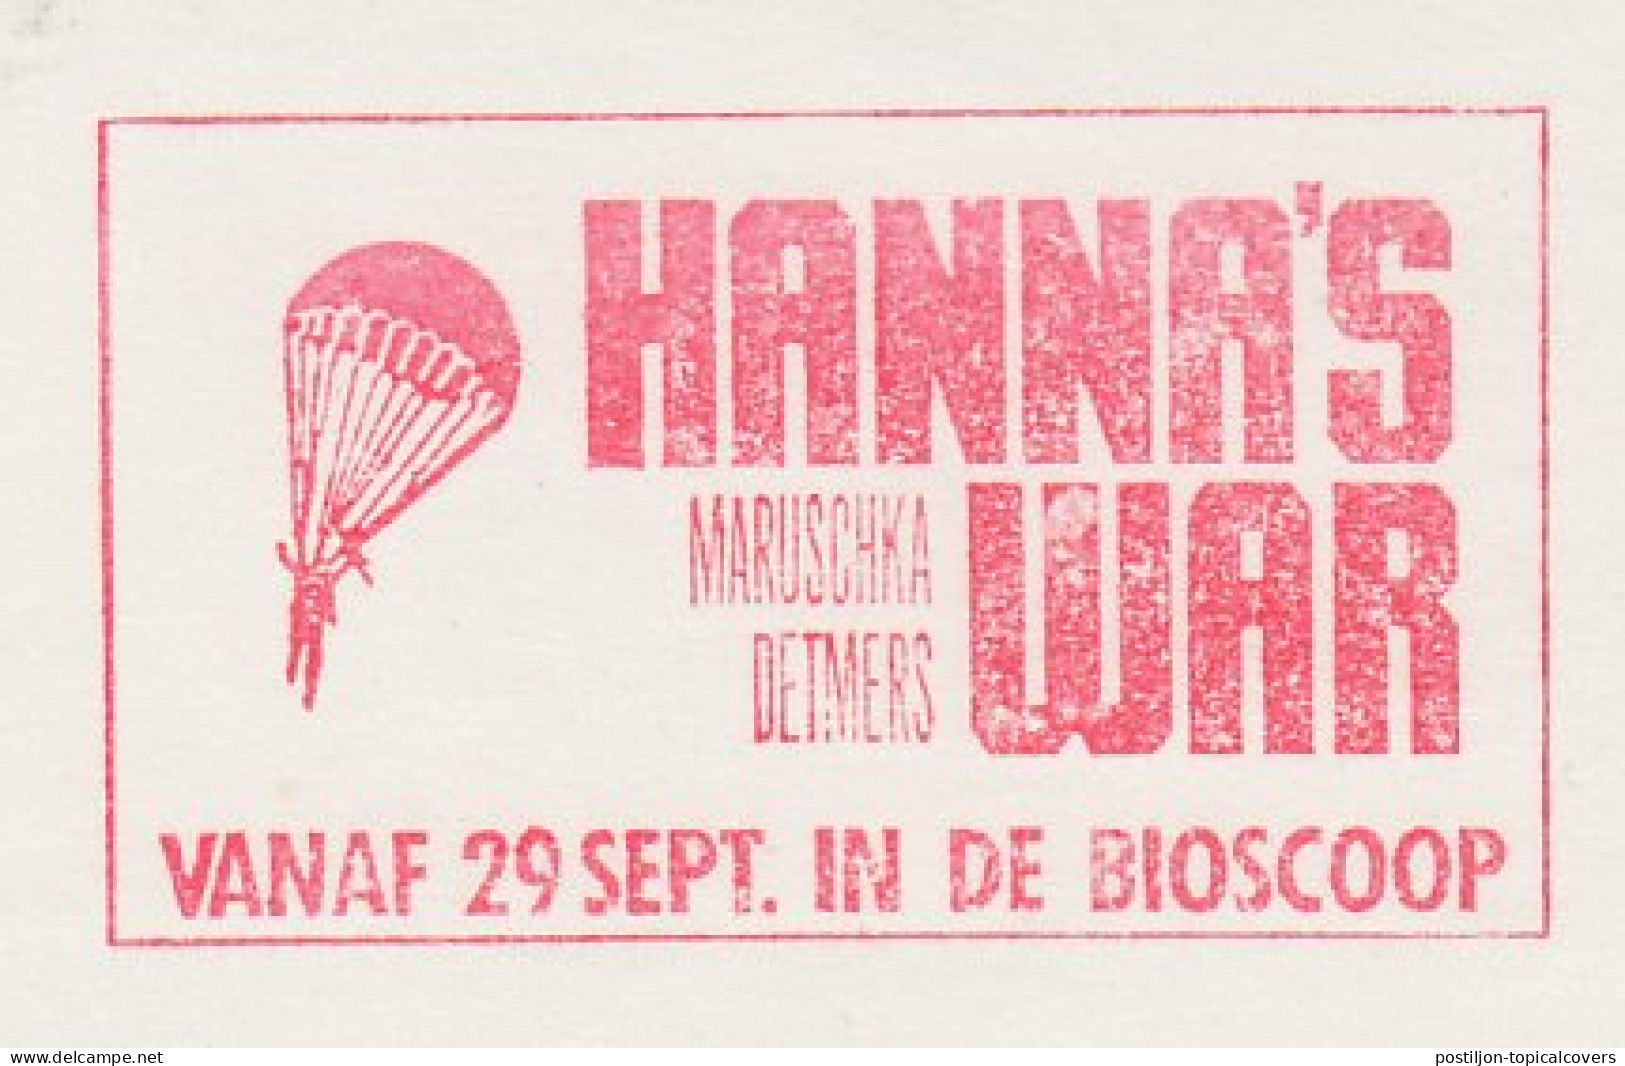 Meter Cut Netherlands 1988 Hanna S War - Movie - Kino